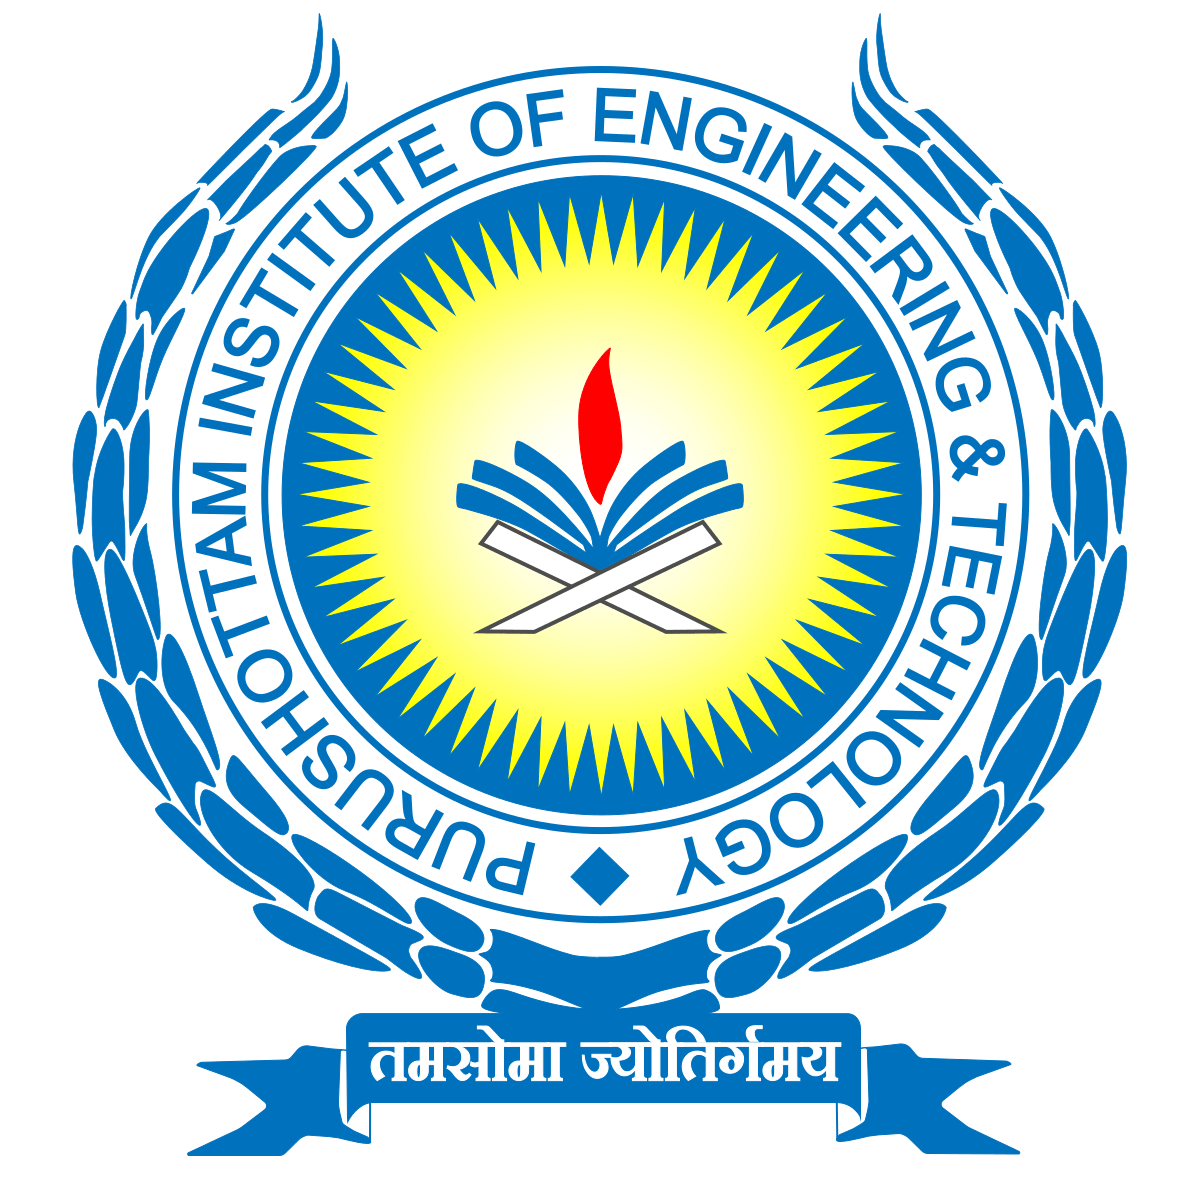 RKL Logo - Purushottam Institute of Engineering and Technology